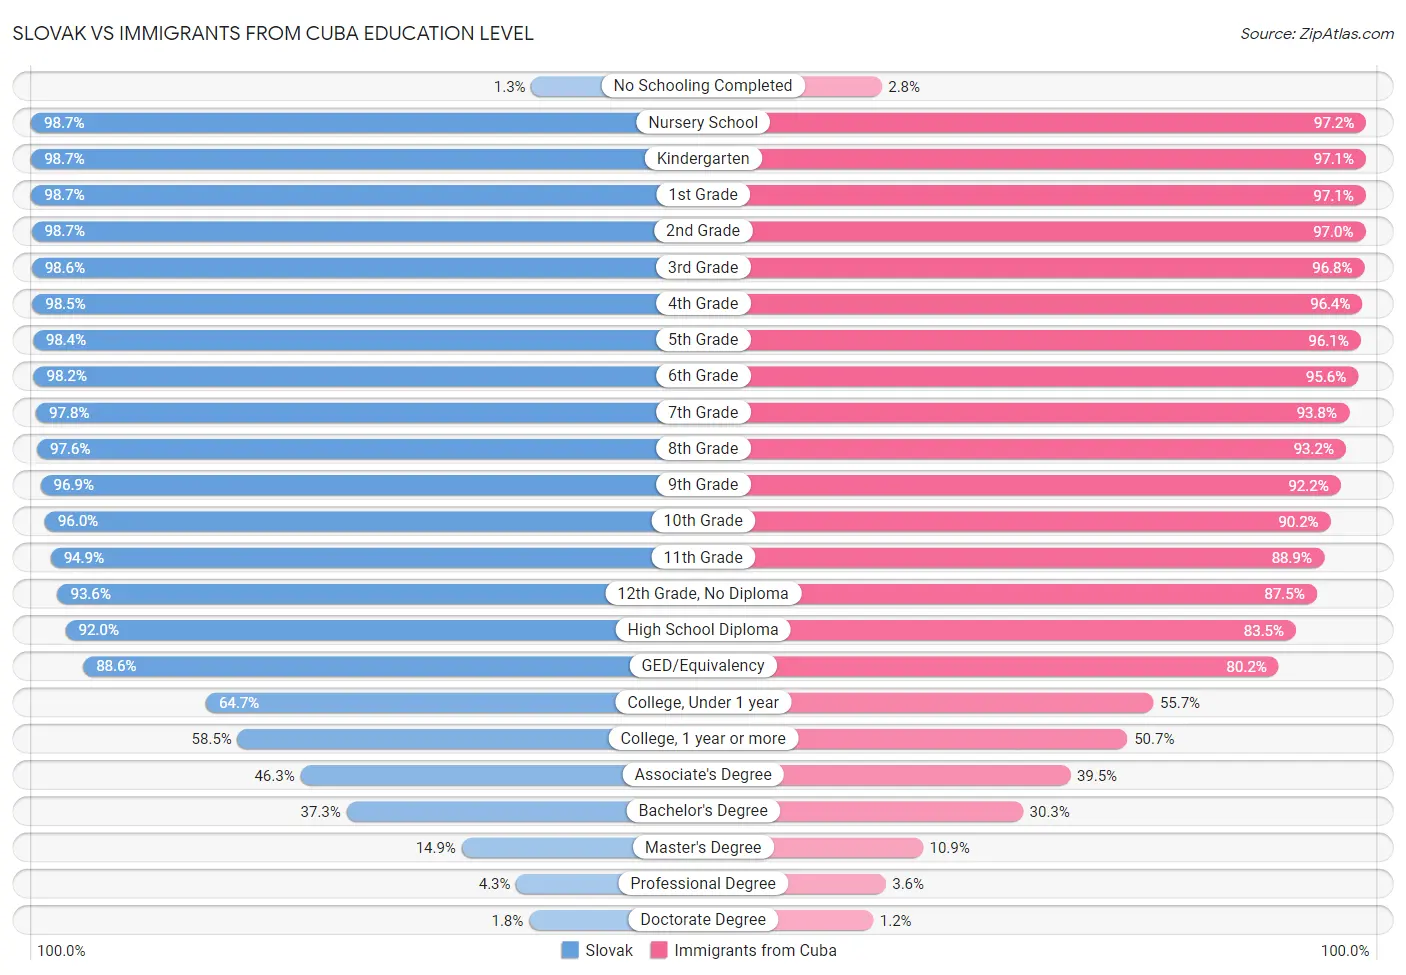 Slovak vs Immigrants from Cuba Education Level